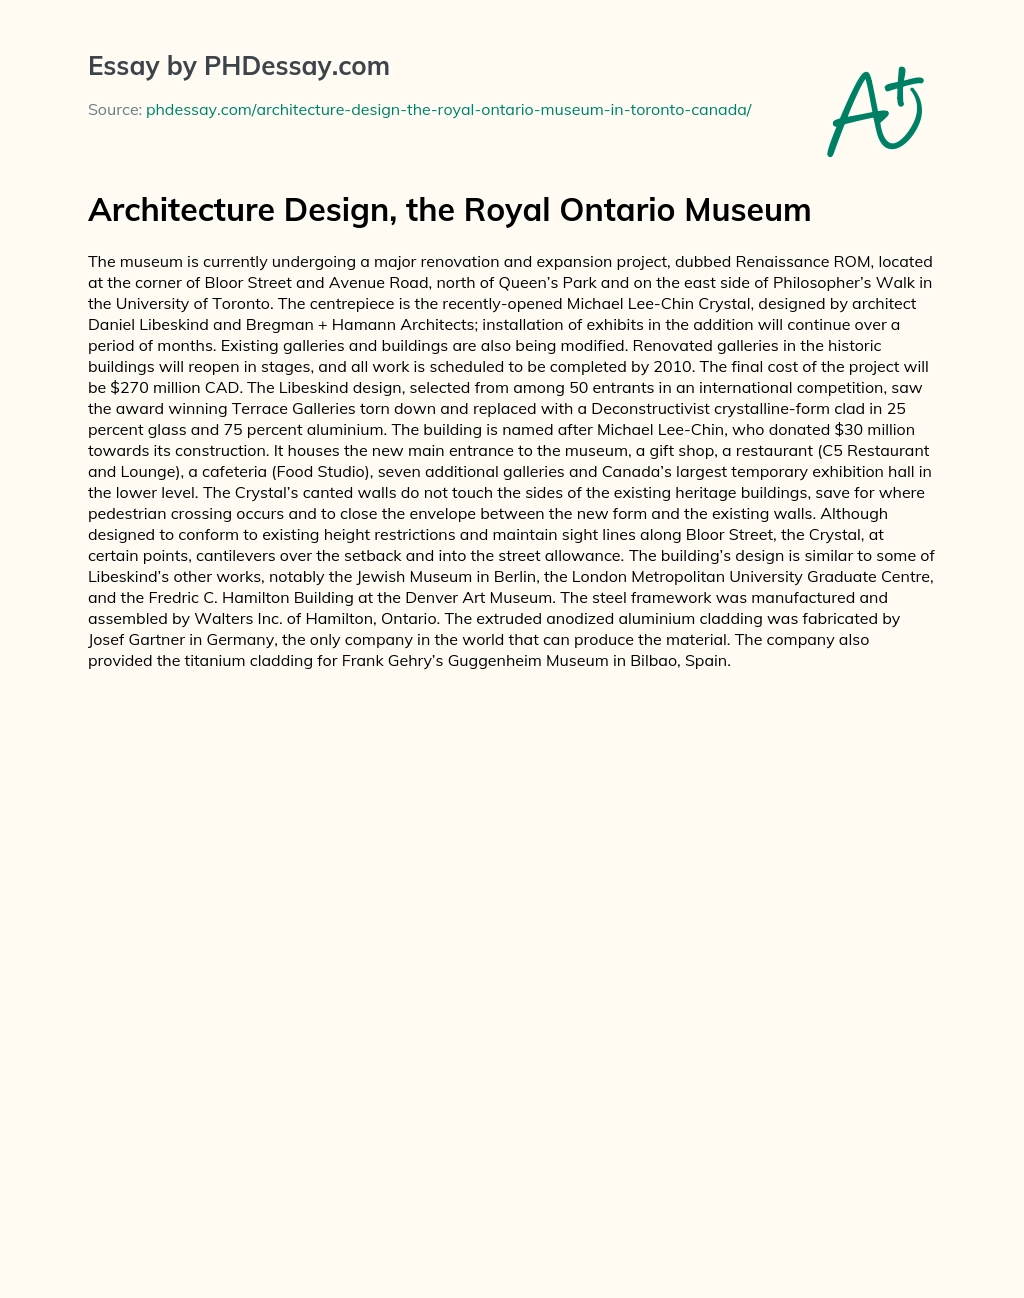 Architecture Design, the Royal Ontario Museum essay